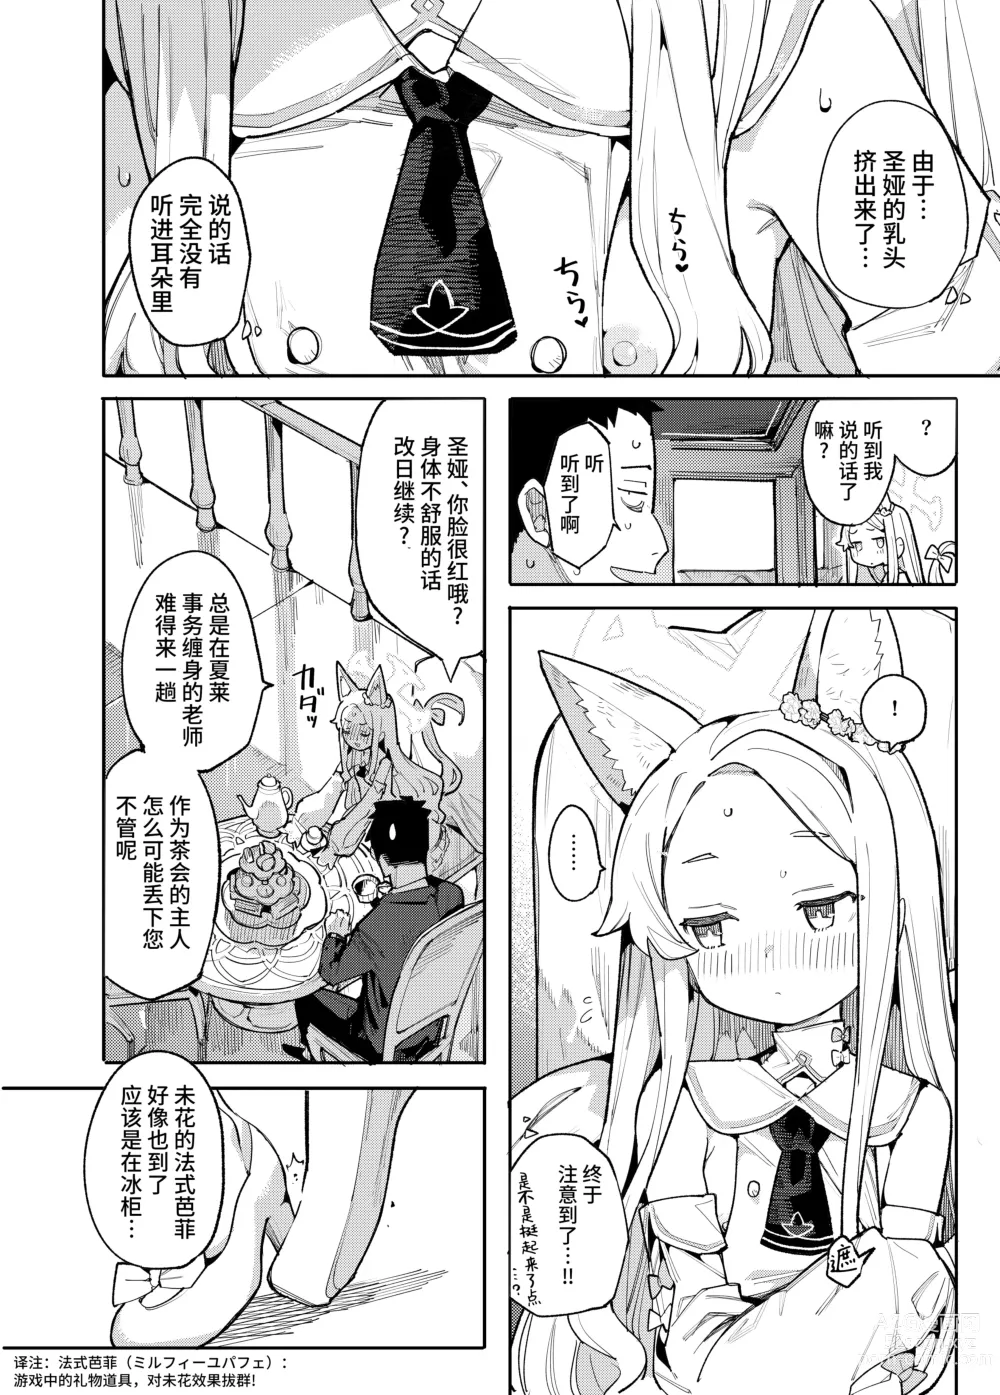 Page 4 of doujinshi 母狐狸看到了色色的未来。